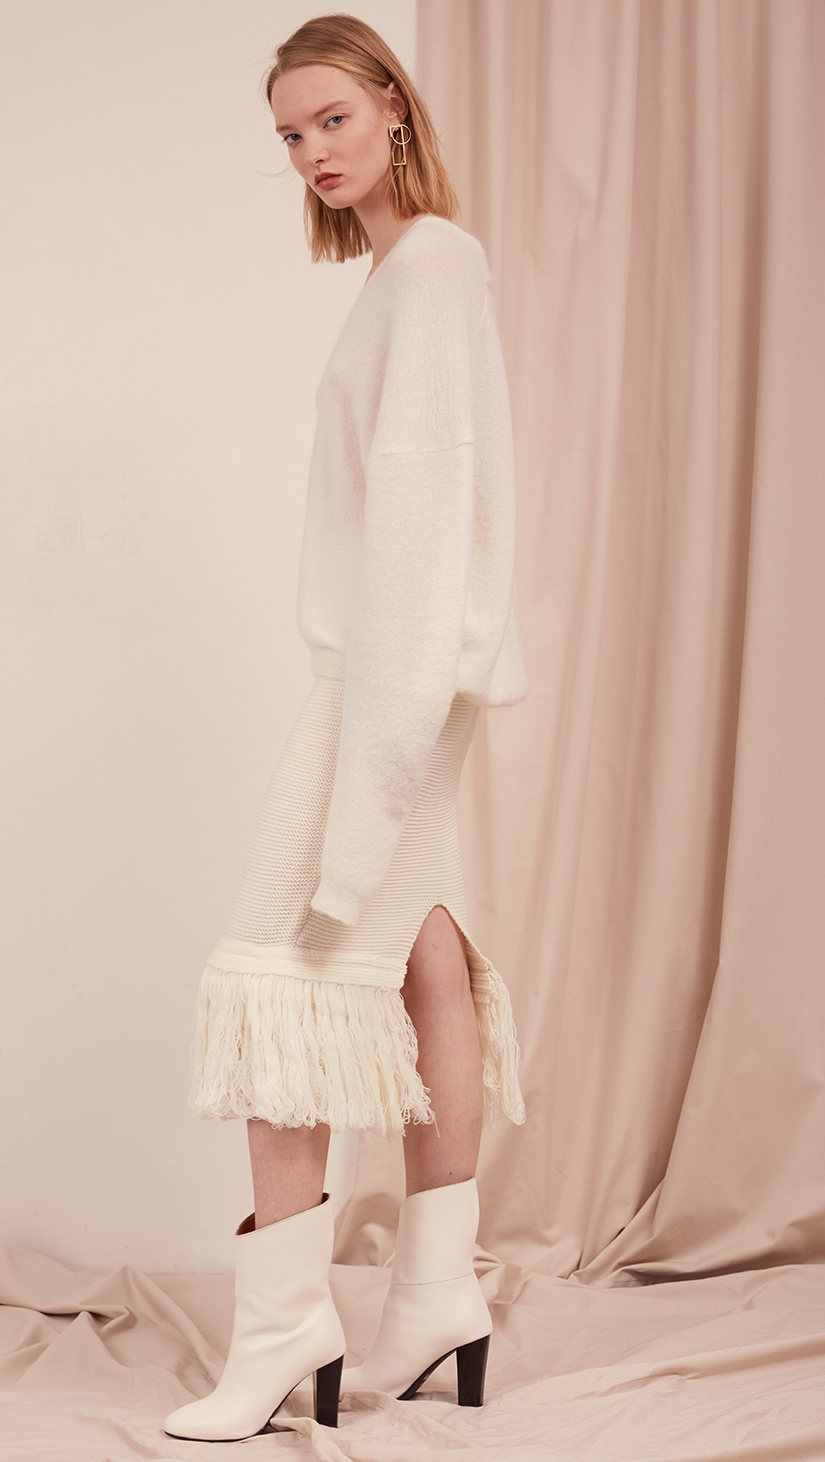 The Losara Skirt in ribbed knit off-white. With gathered elastic waistband, tassels hem, deep v back slits. 